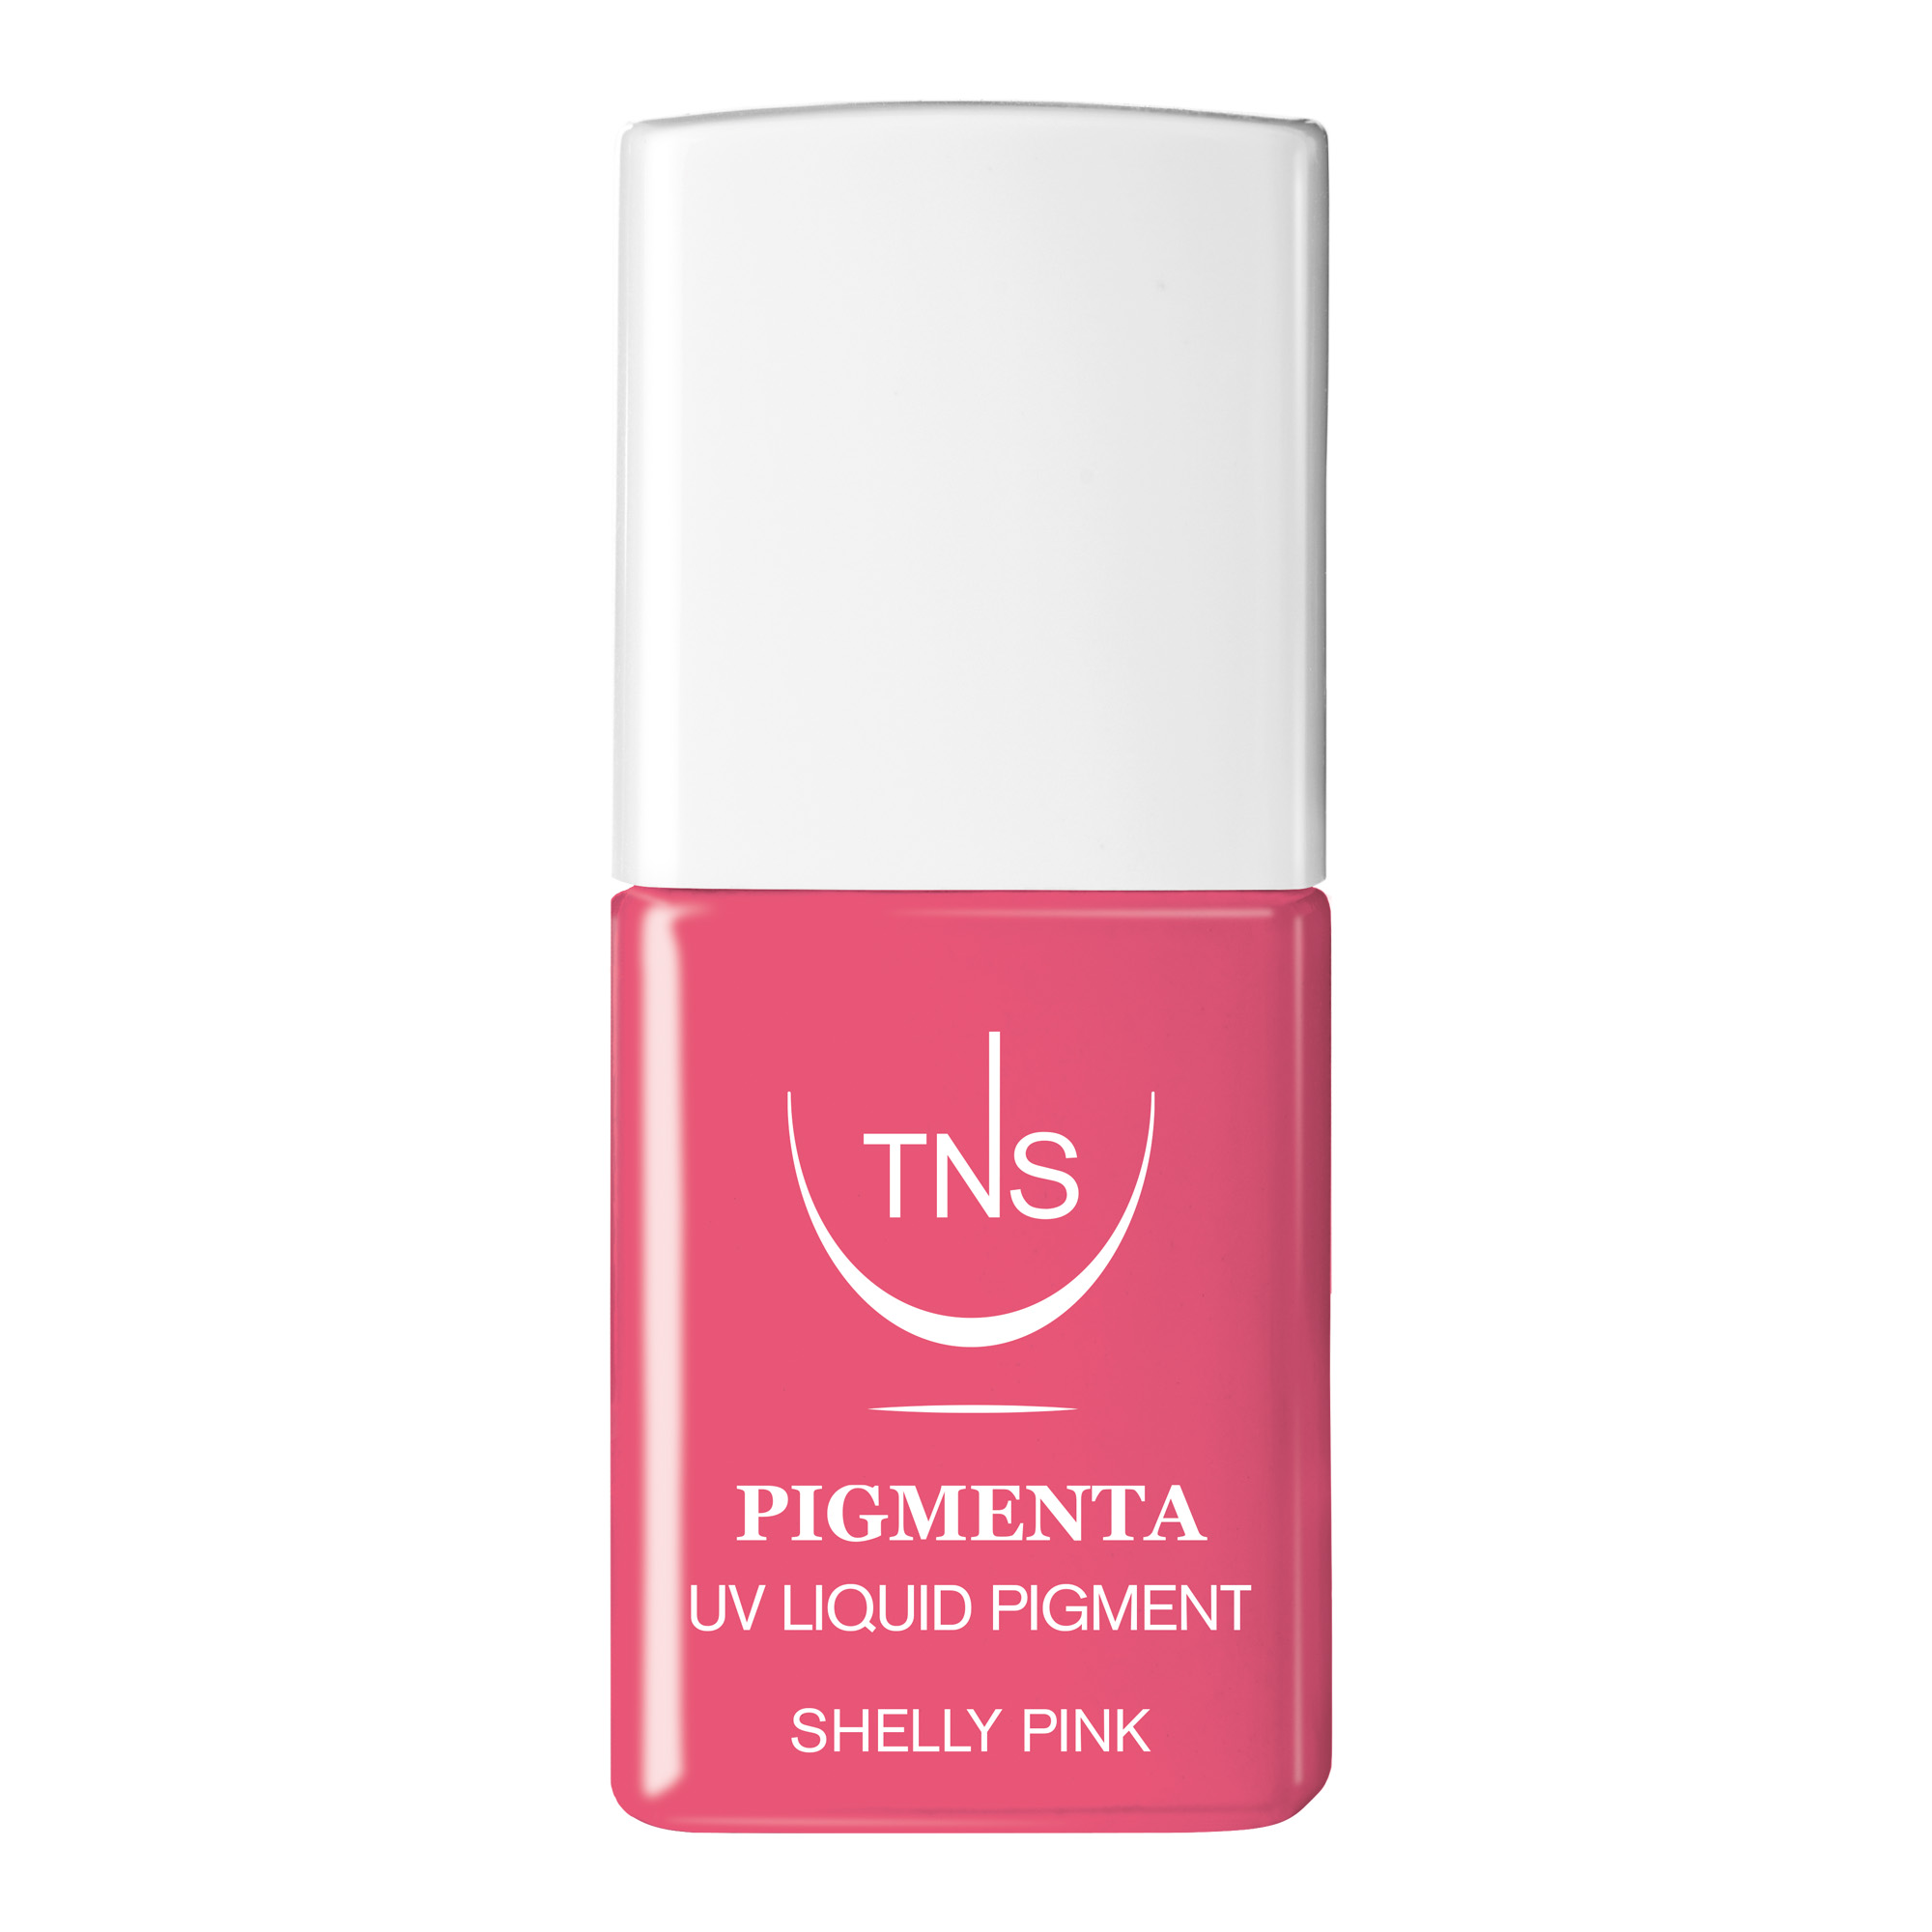 UV Flüssigpigment Shelly Pink hellrosa 10 ml Pigmenta TNS